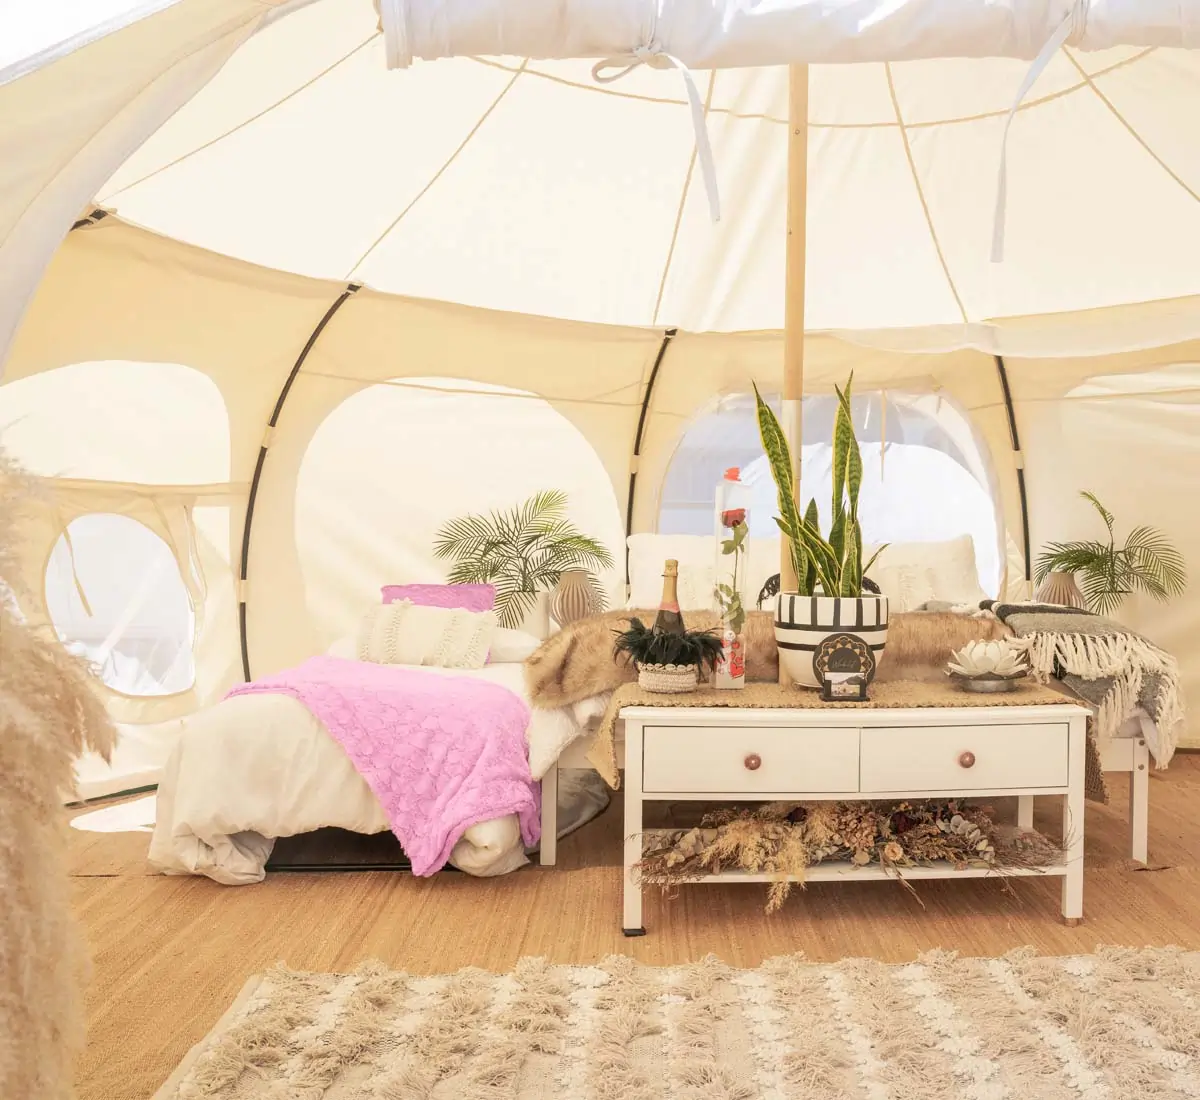 Cozy airbnb yurt.